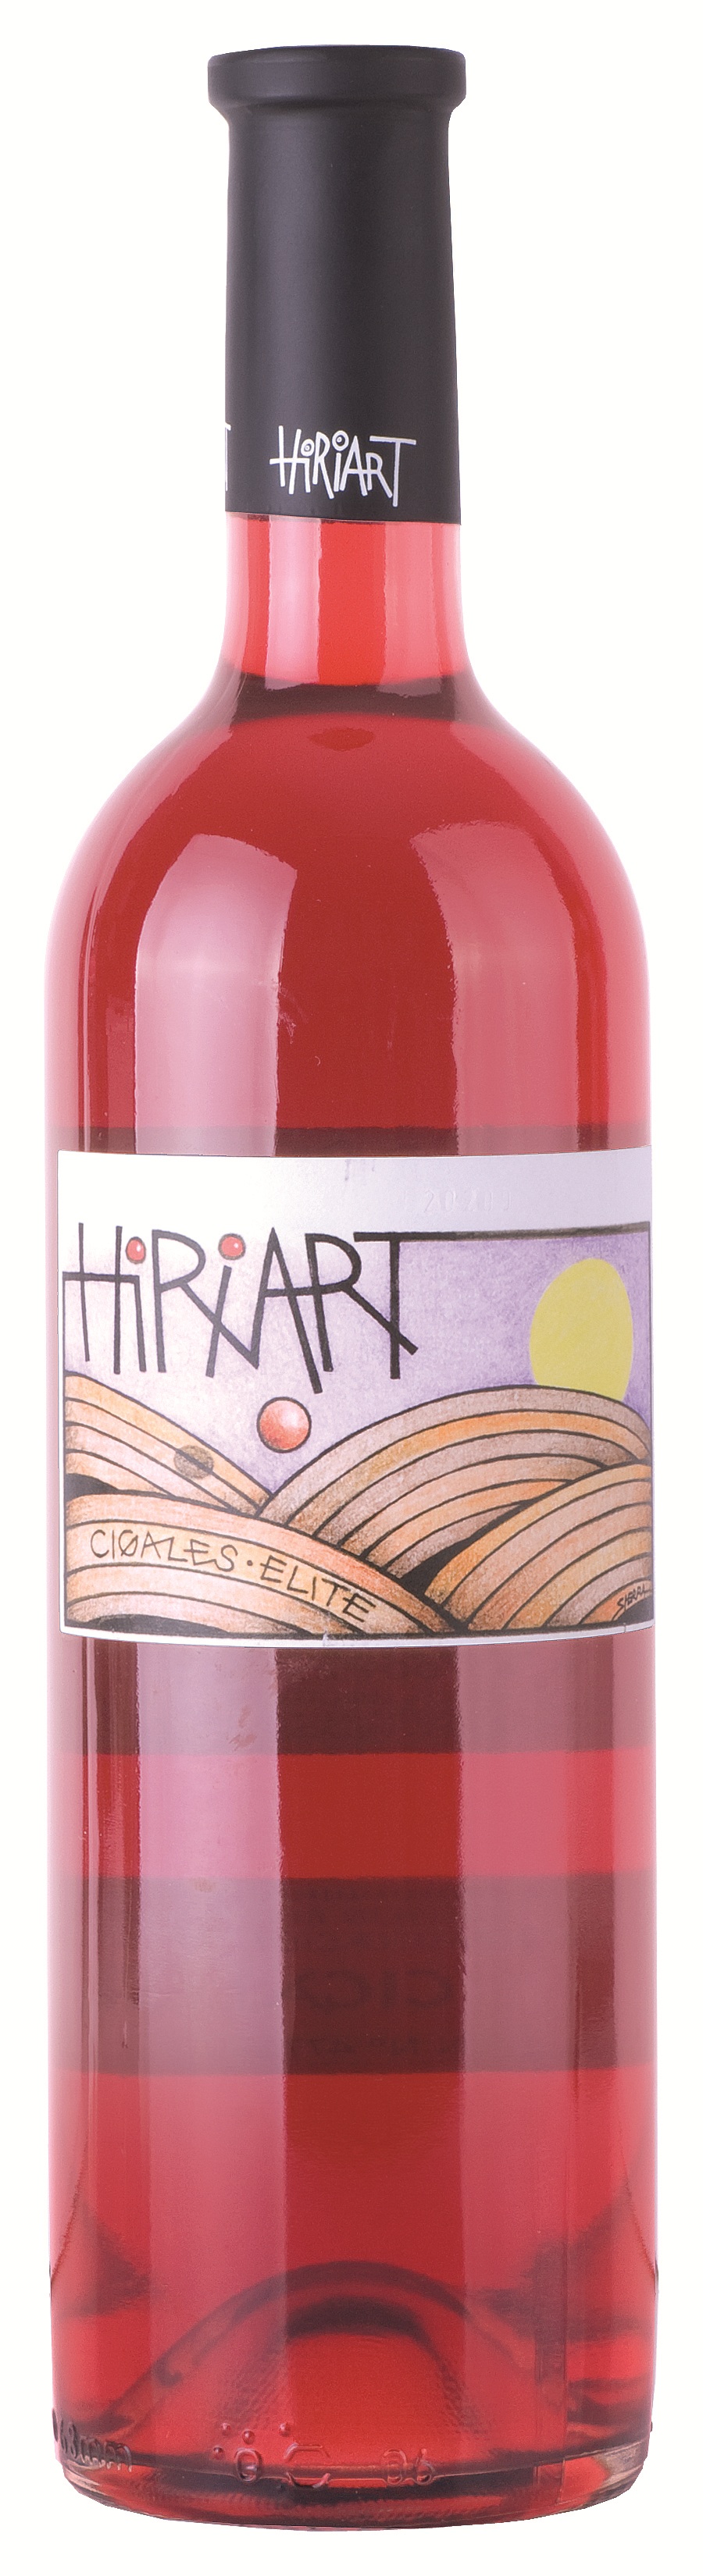 Image of Wine bottle Hiriart Rosado Élite